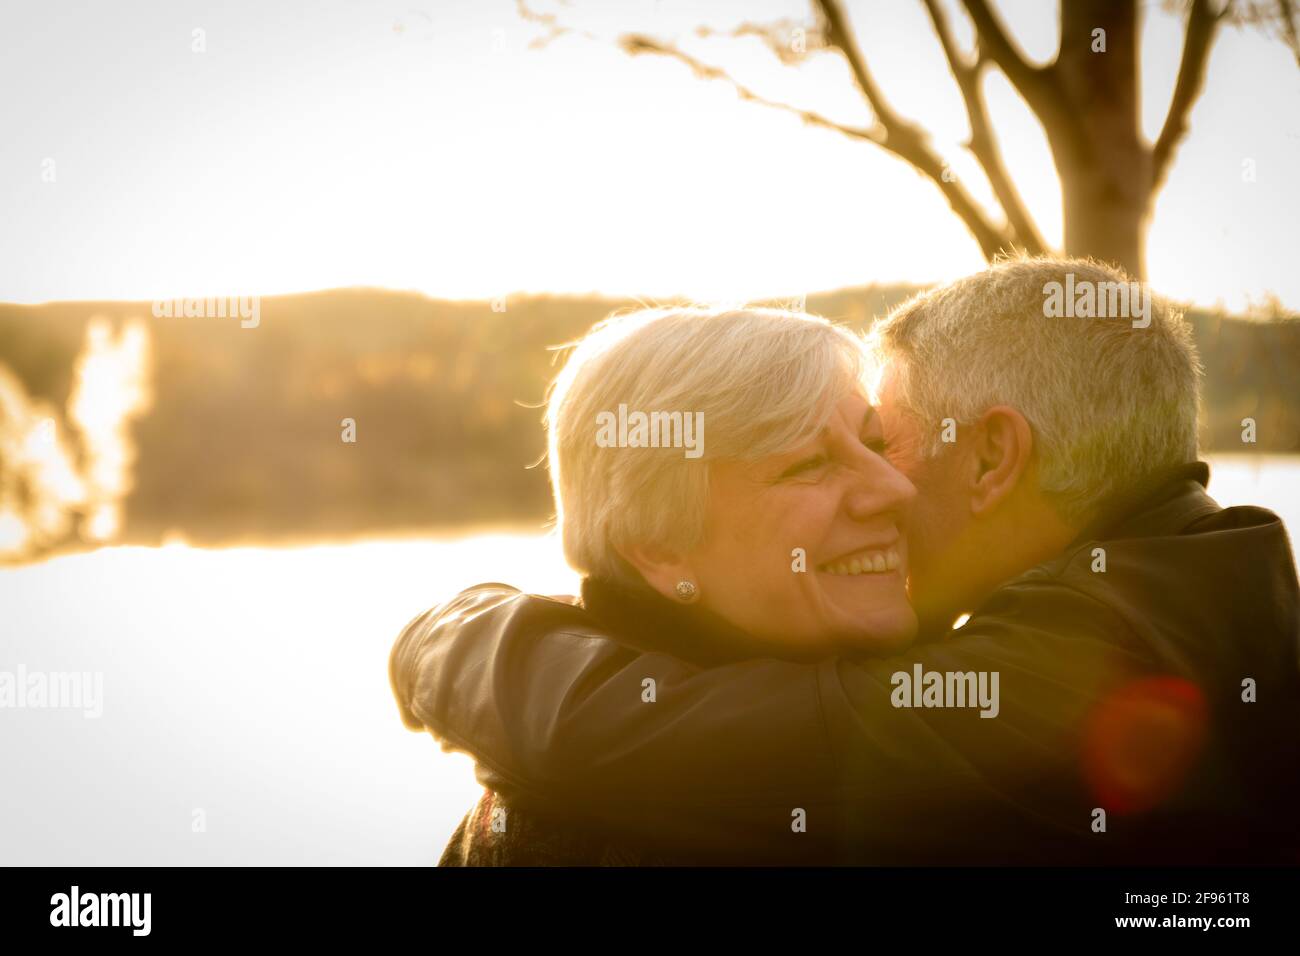 Ältere Paar-Modelle in der Liebe in den Sonnenuntergang Stockfoto